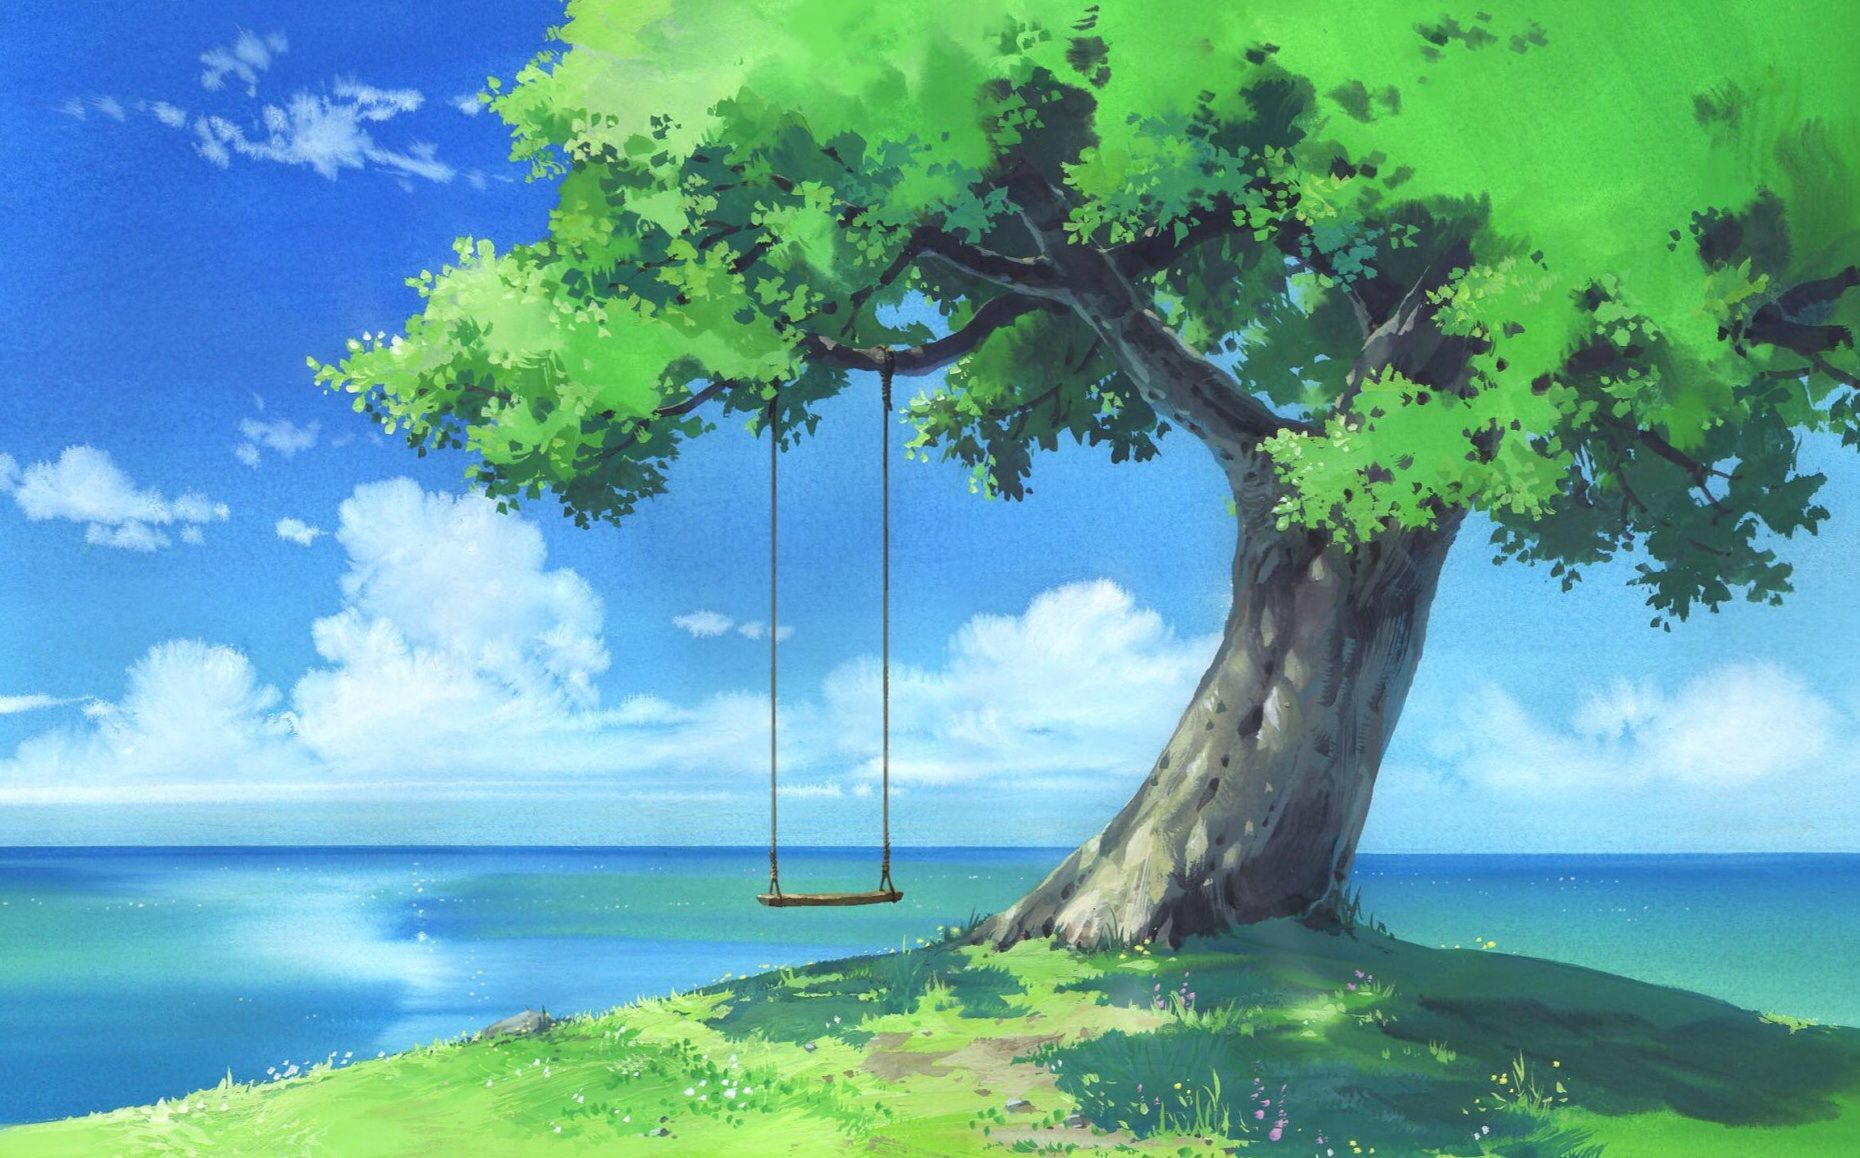 Anime Landscapes. Anime background, Anime scenery wallpaper, Anime background wallpaper